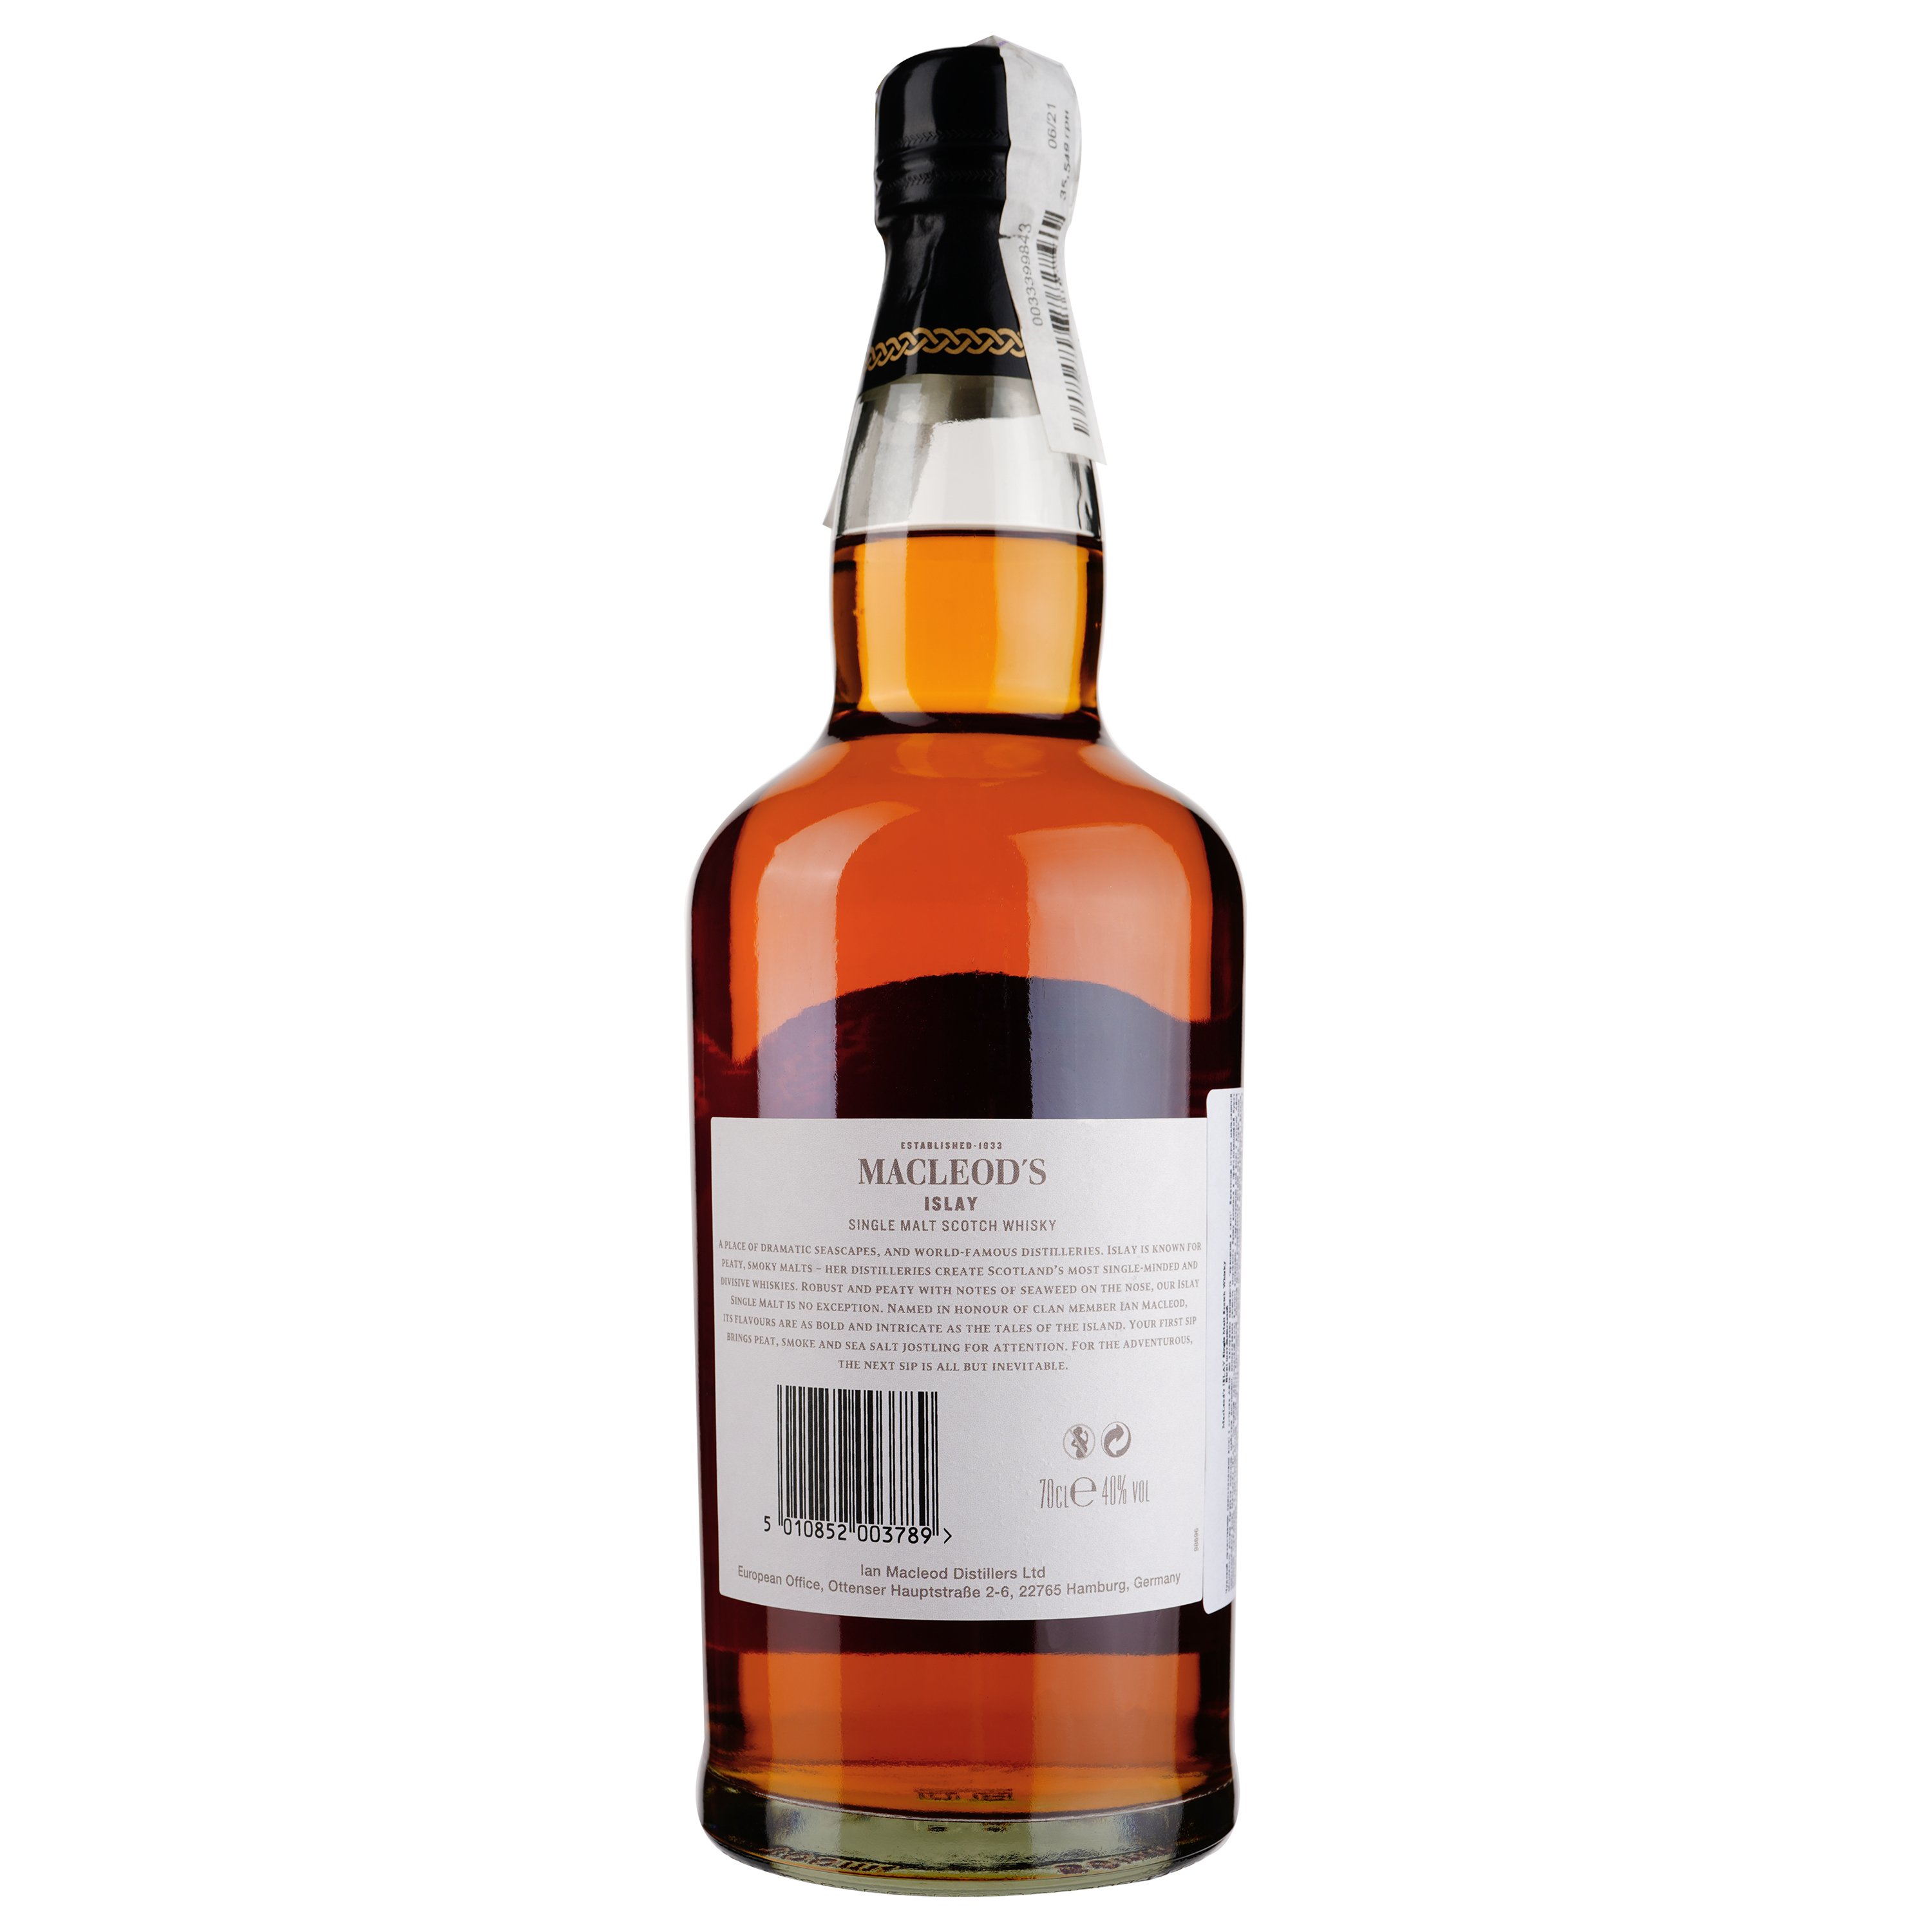 Віскі Macleod's Islay Single Malt Scotch Whisky, 40%, 0,7 л - фото 2